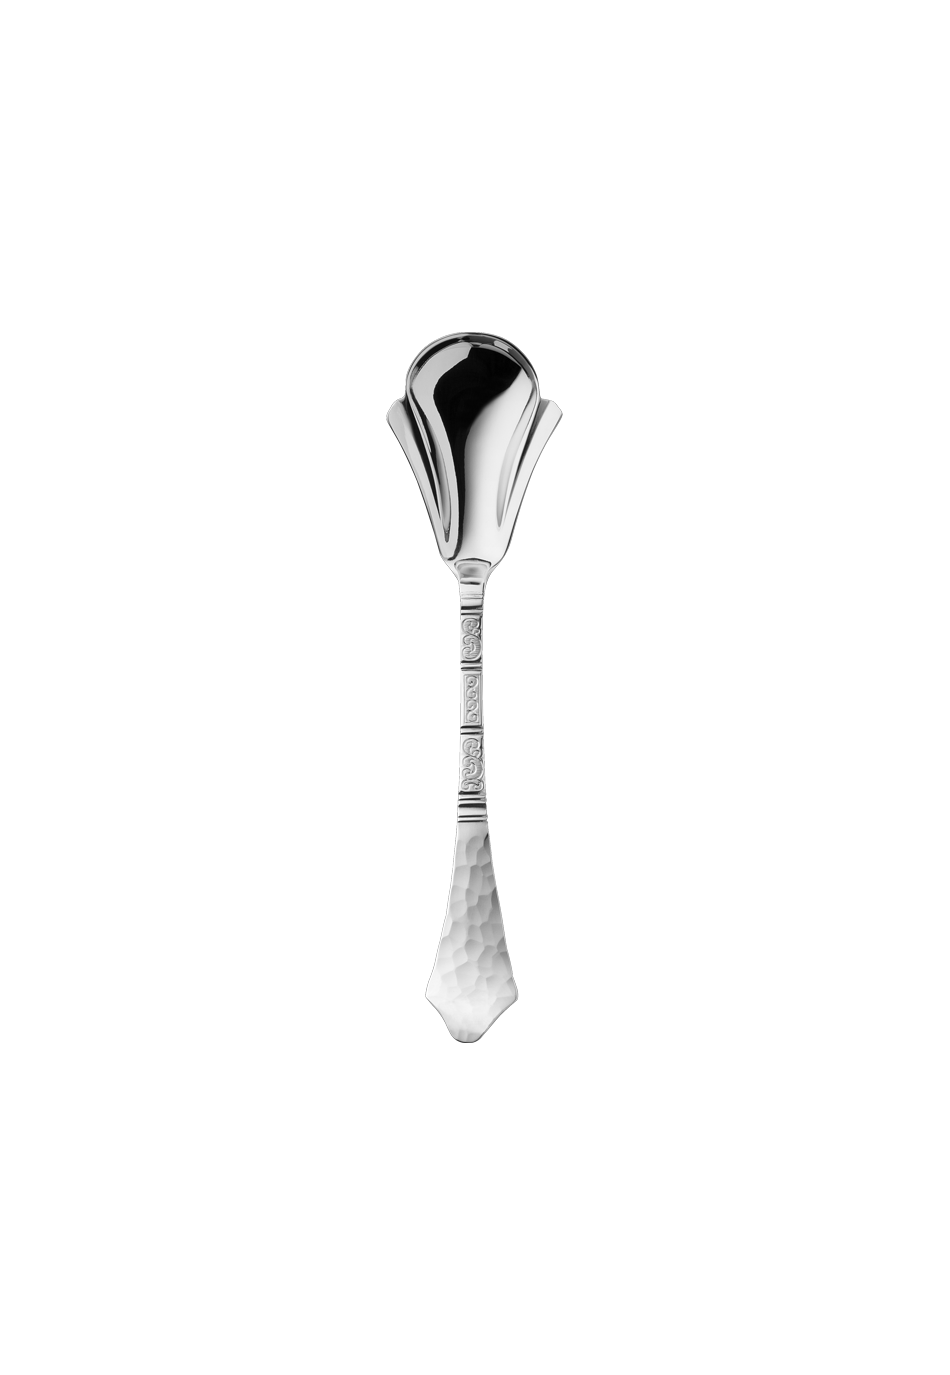 Hermitage Sugar Spoon (150g massive silverplated)